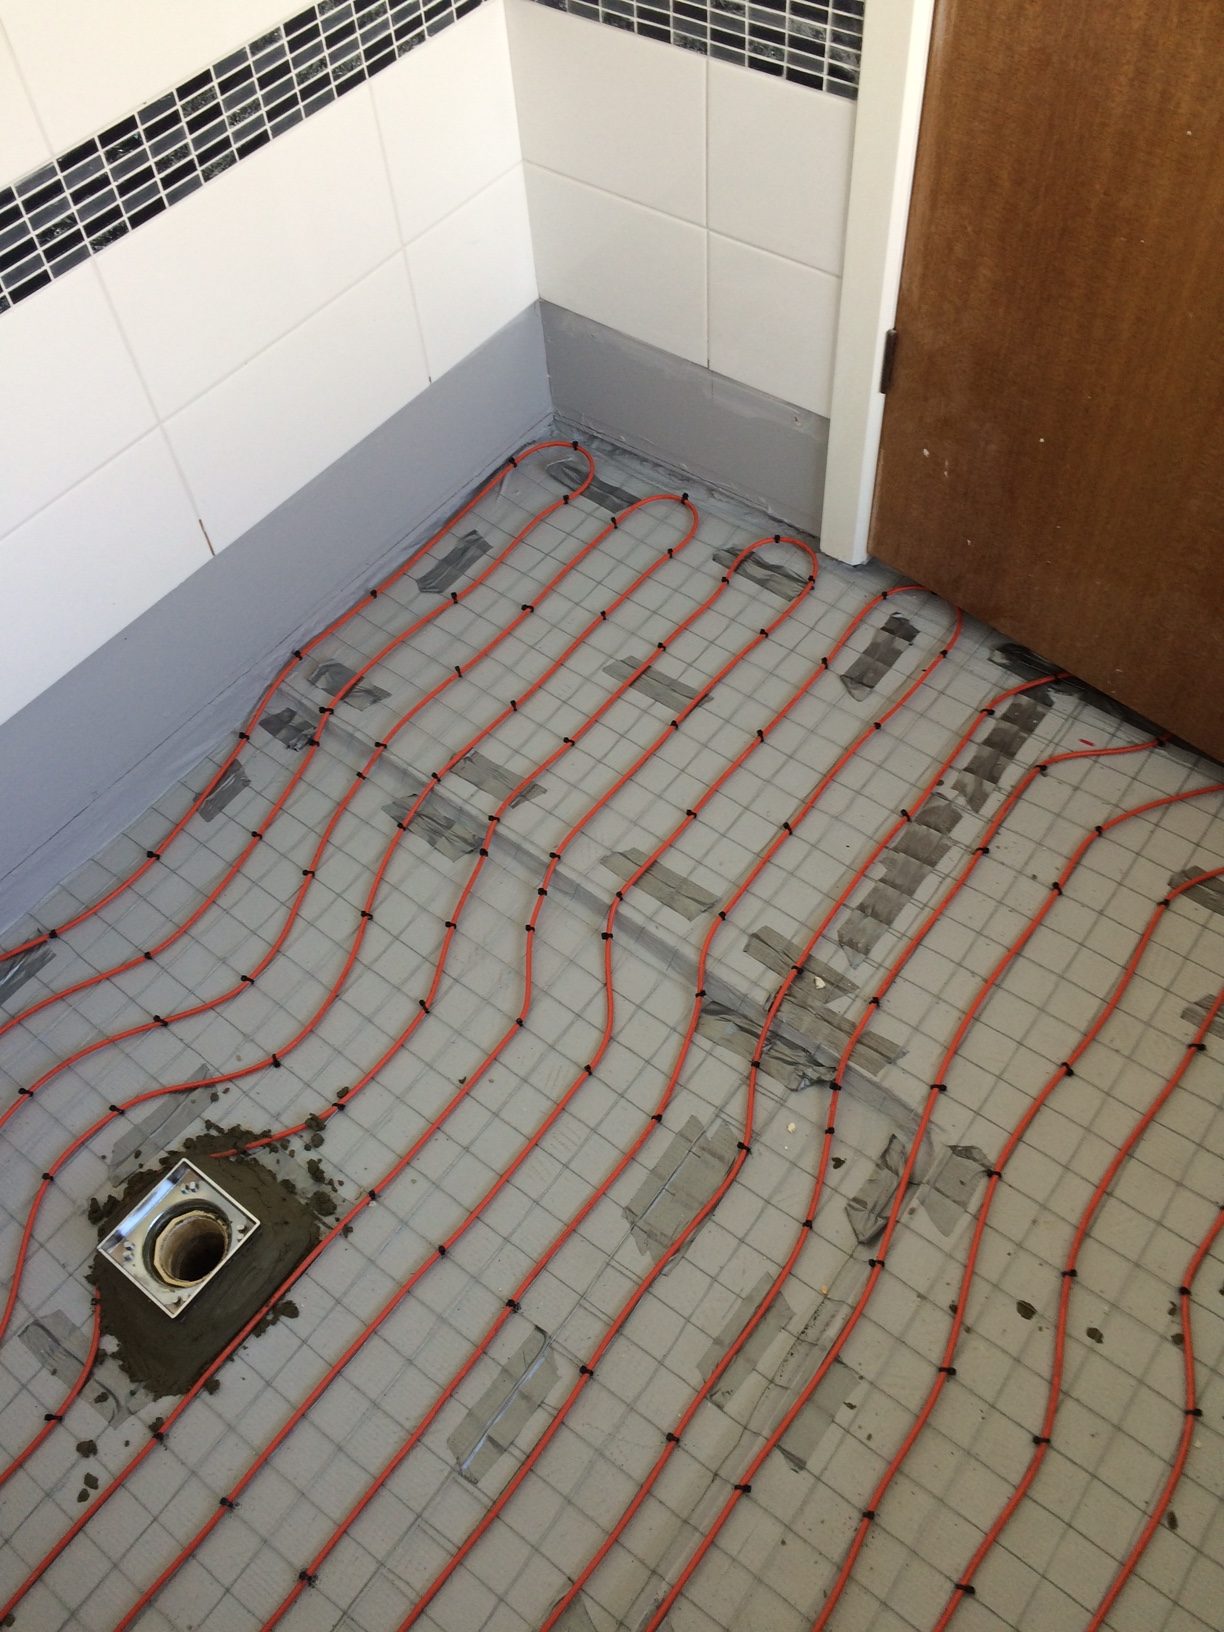 Underfloor heating in the bathroom